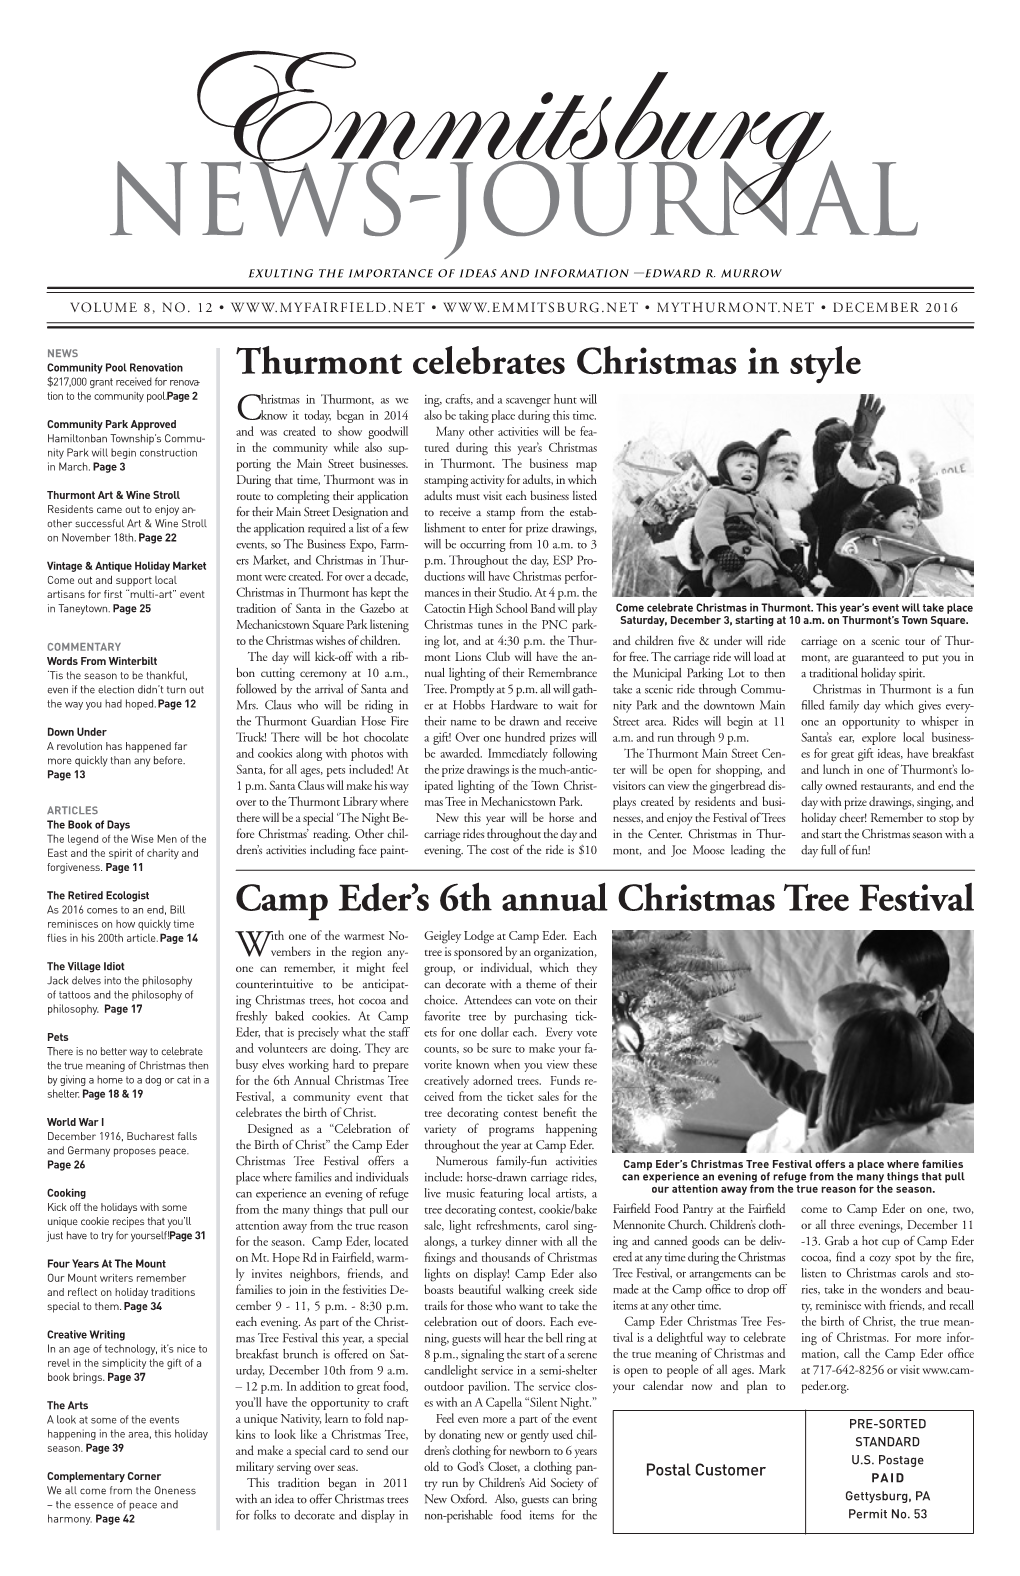 Camp Eder's 6Th Annual Christmas Tree Festival Thurmont Celebrates